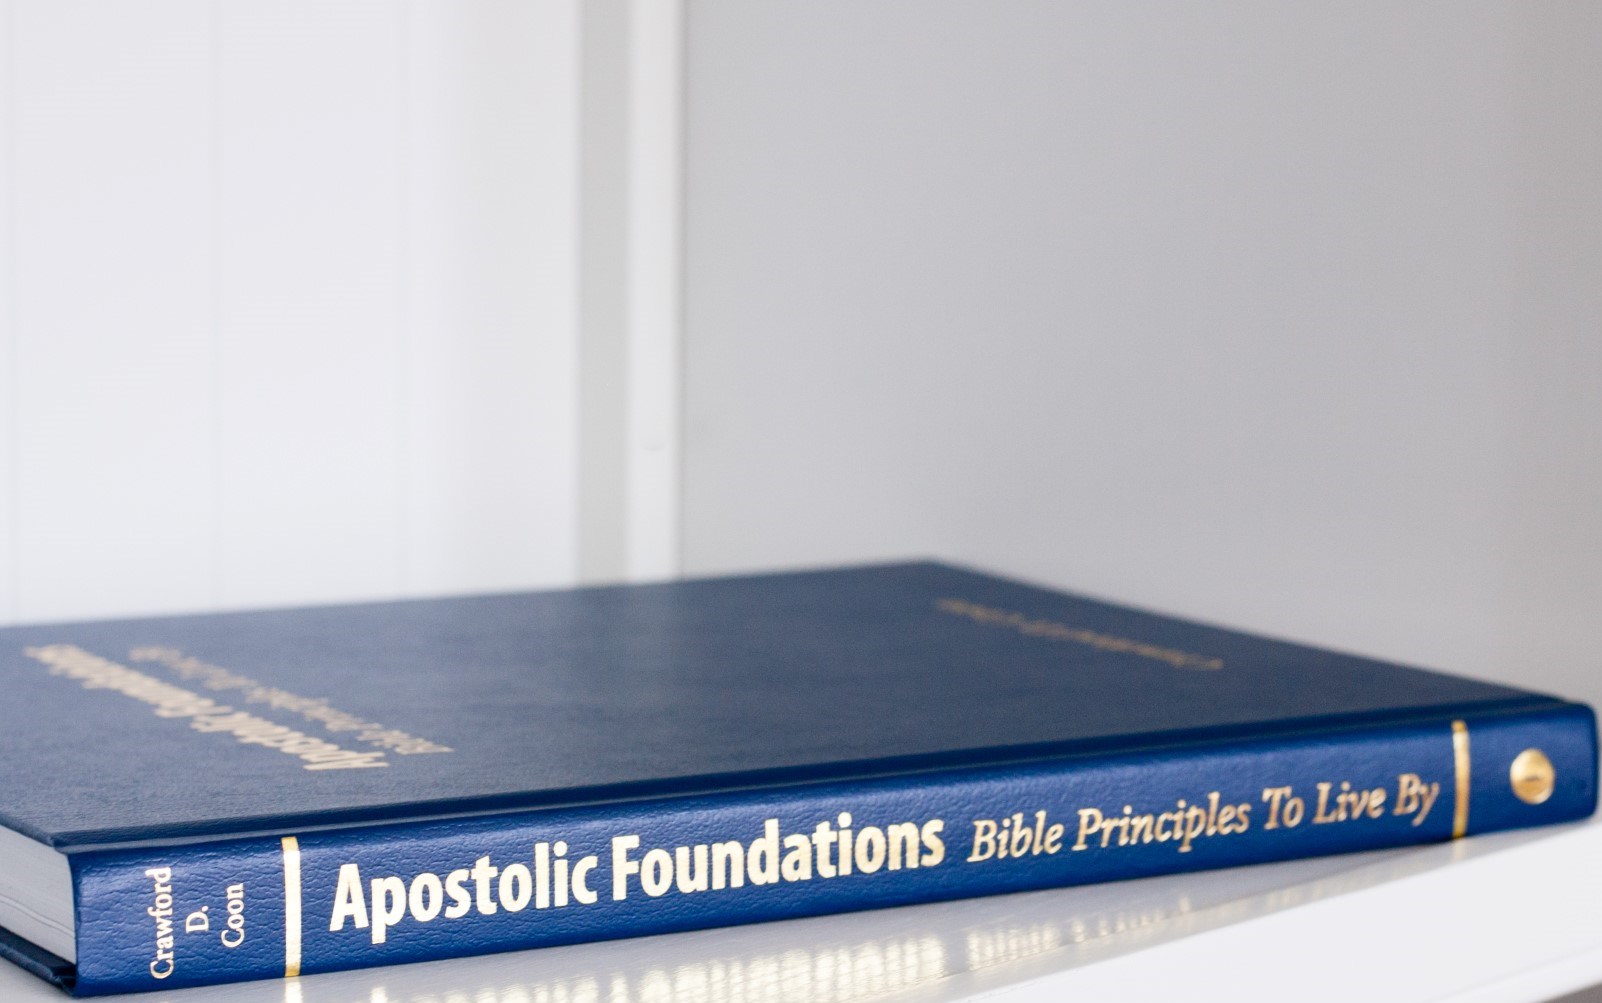 Apostolic Foundations - Crawford Coon